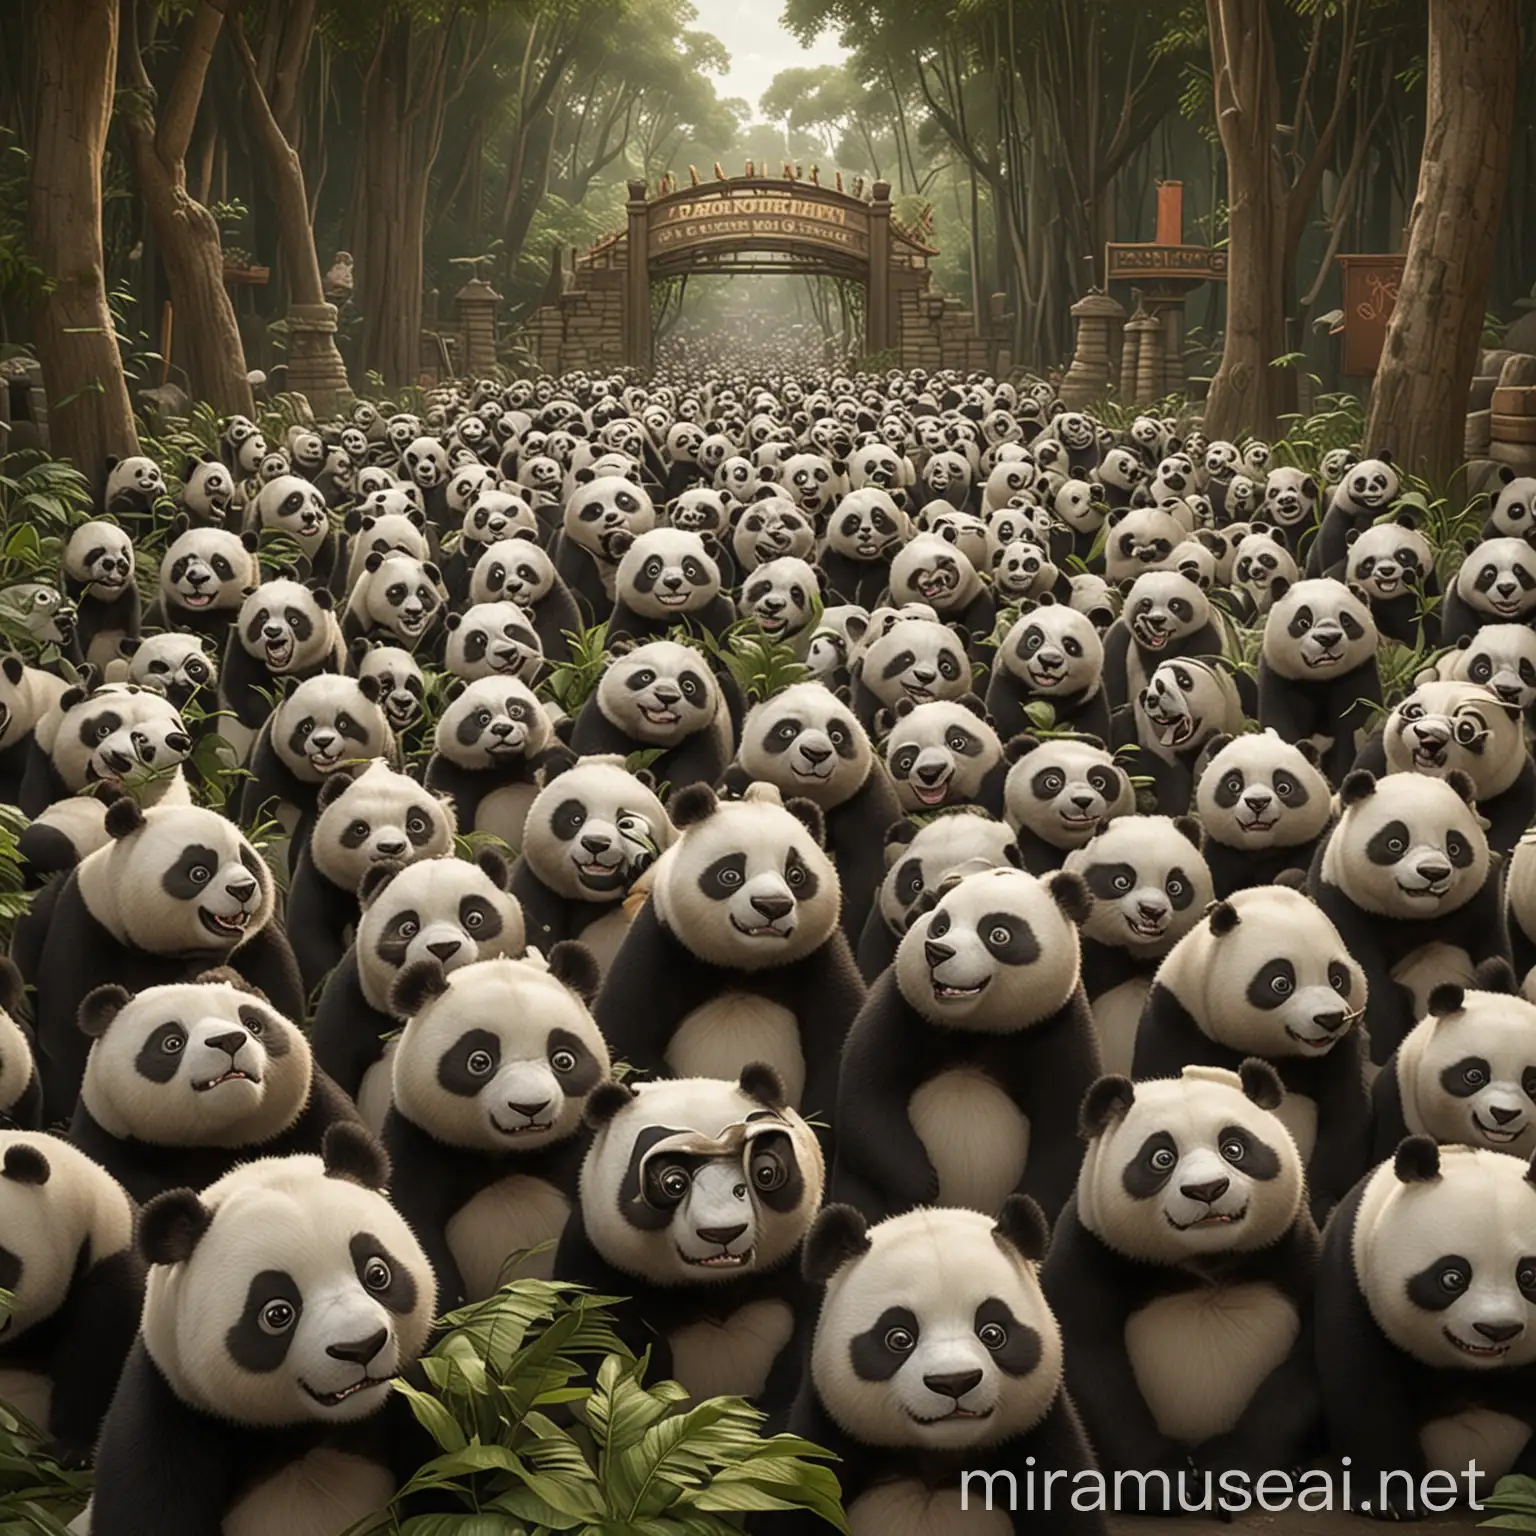 A zoo with 200 pandas，Pixar style